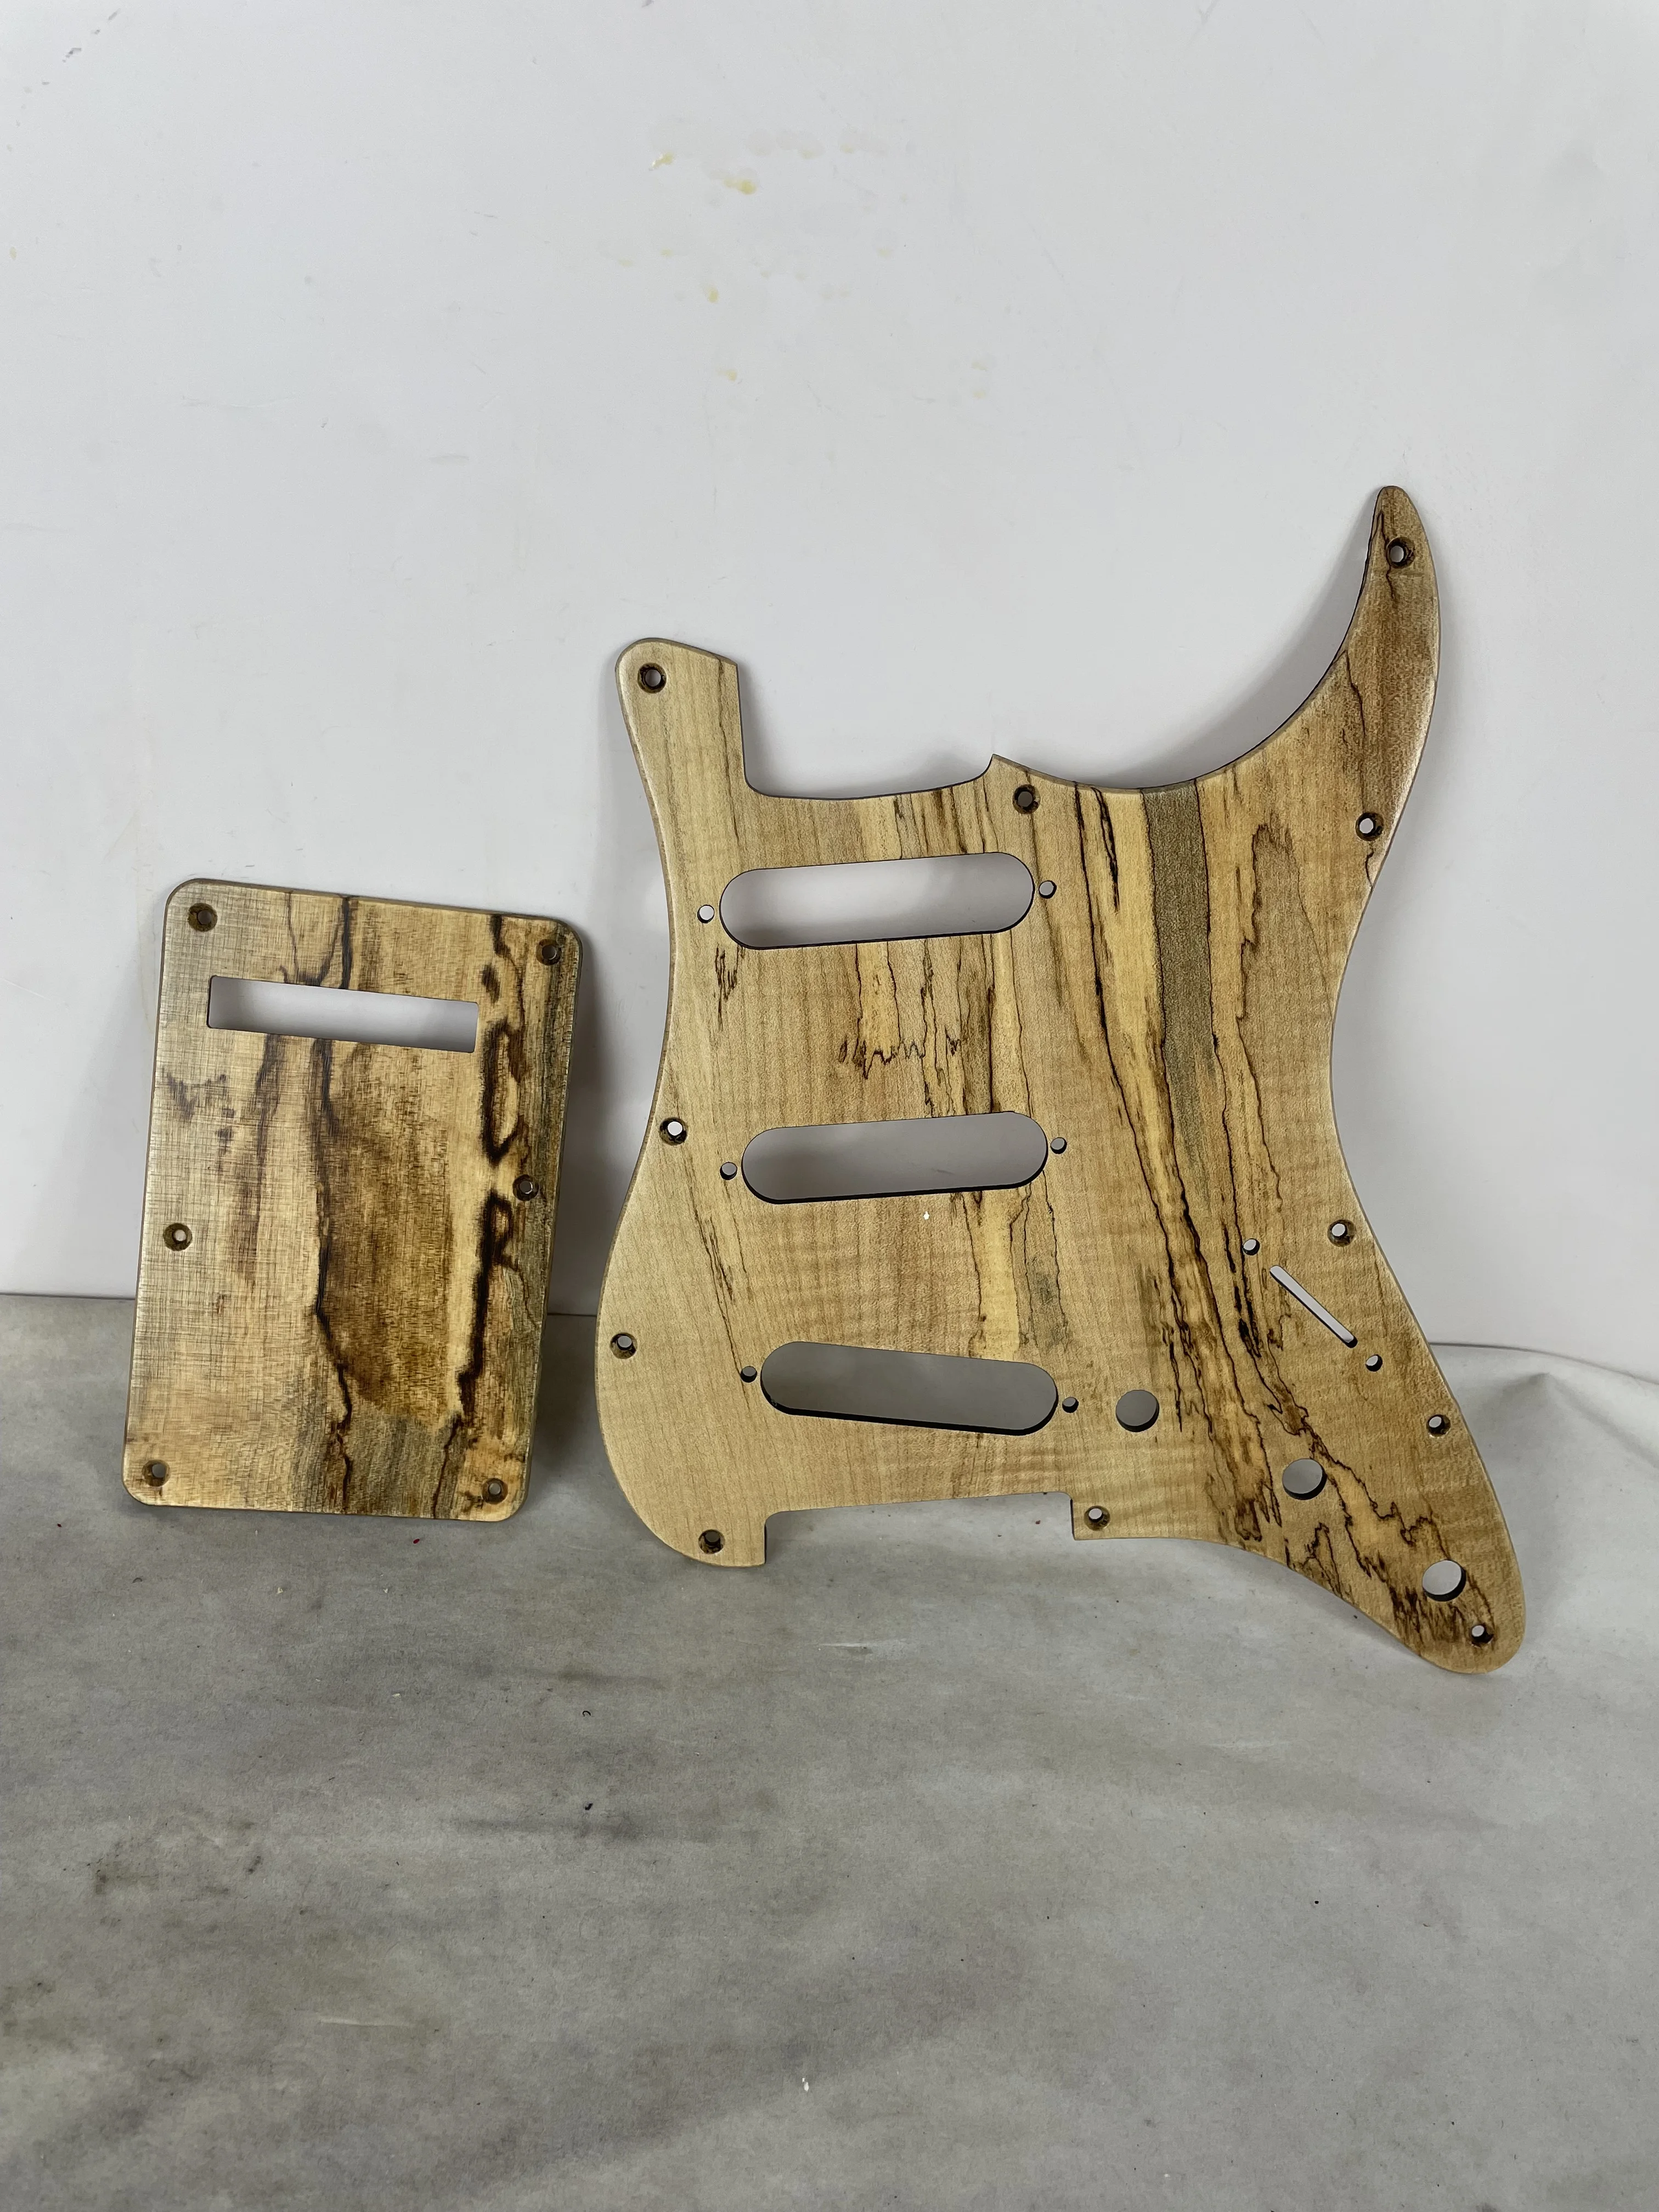 

A Set of Fender Style Flamed Maple Strat ST Guitar Pickguard SSS Natrual Wood Color Pick Guard & Back Plate & Screws Free Ship